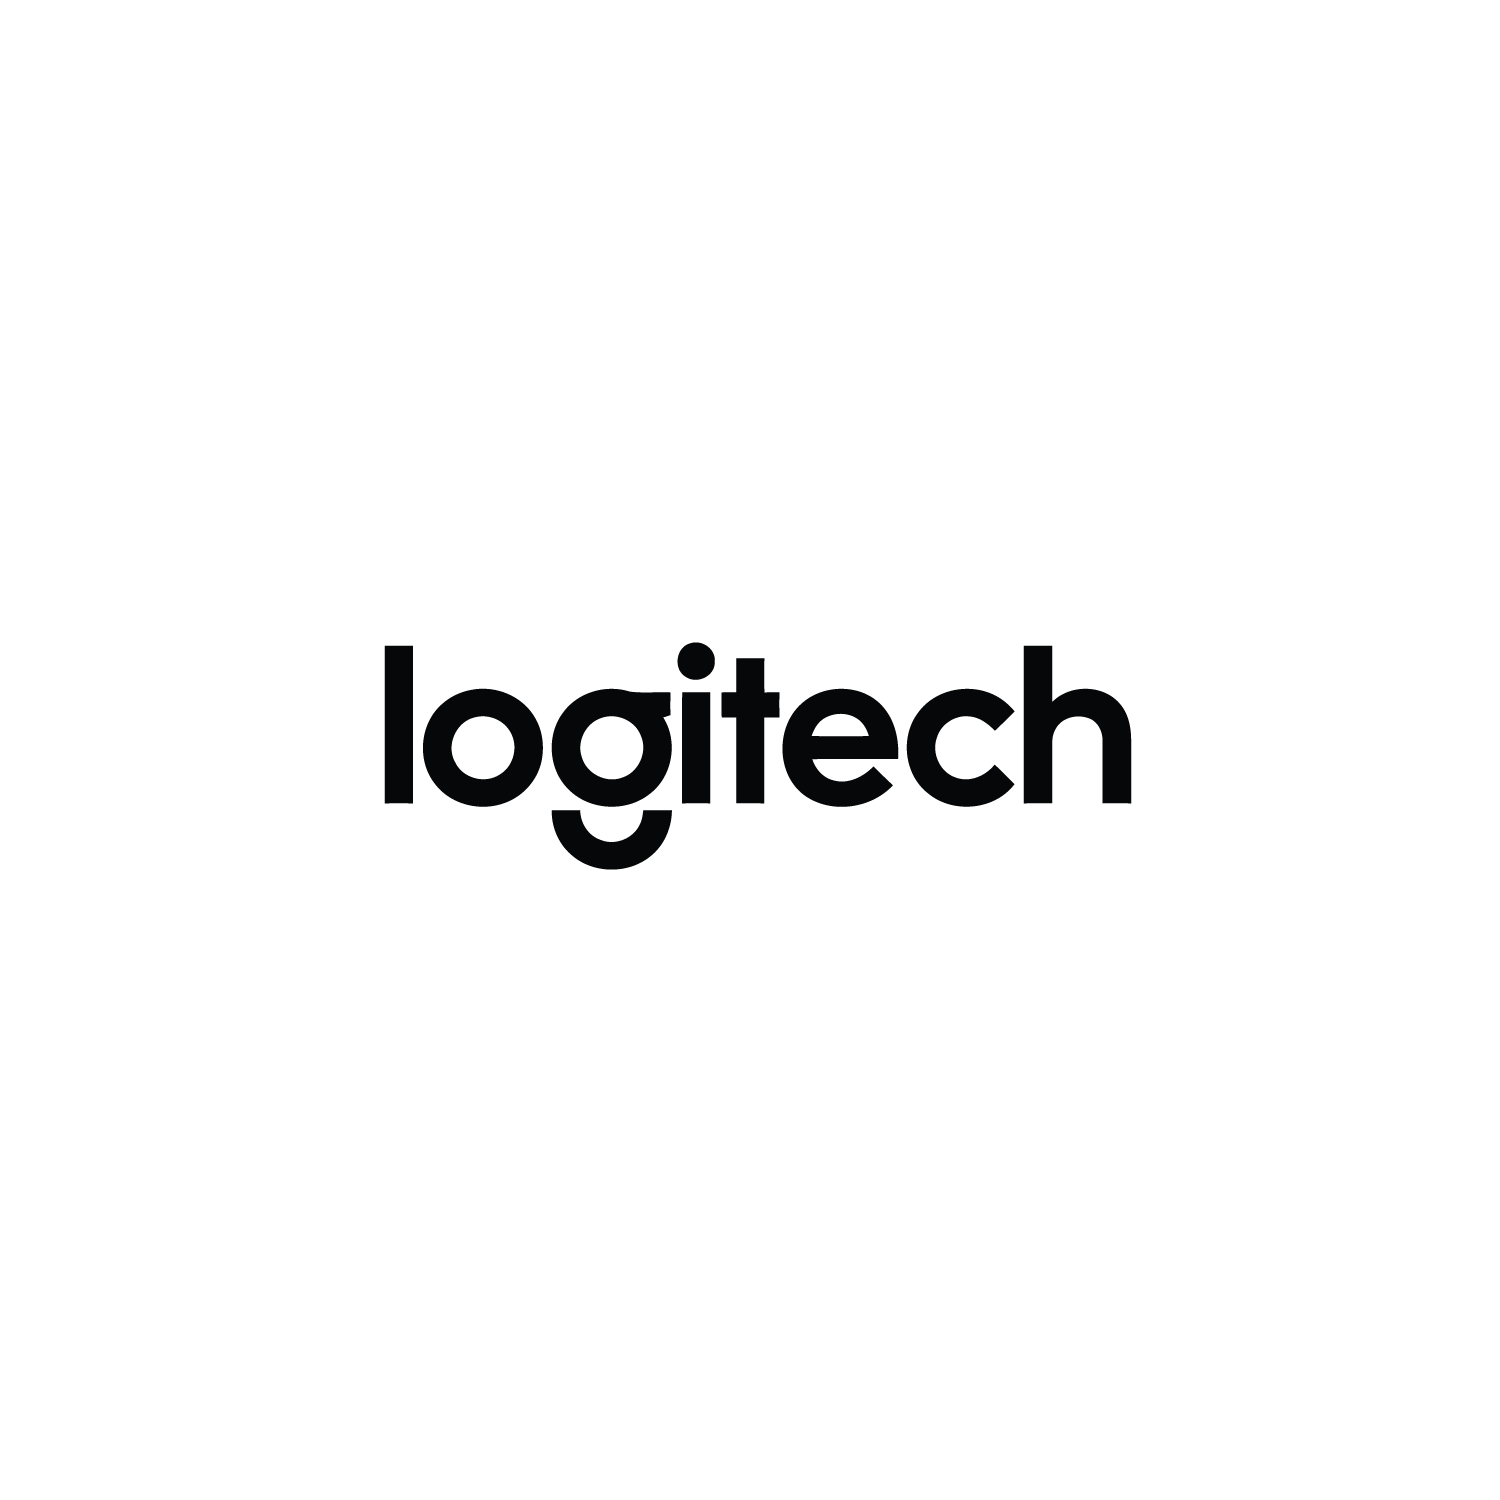 François Soulignac: Logitech China - Digital Creative & Art Direction - MADJOR Labbrand Shanghai, China, China